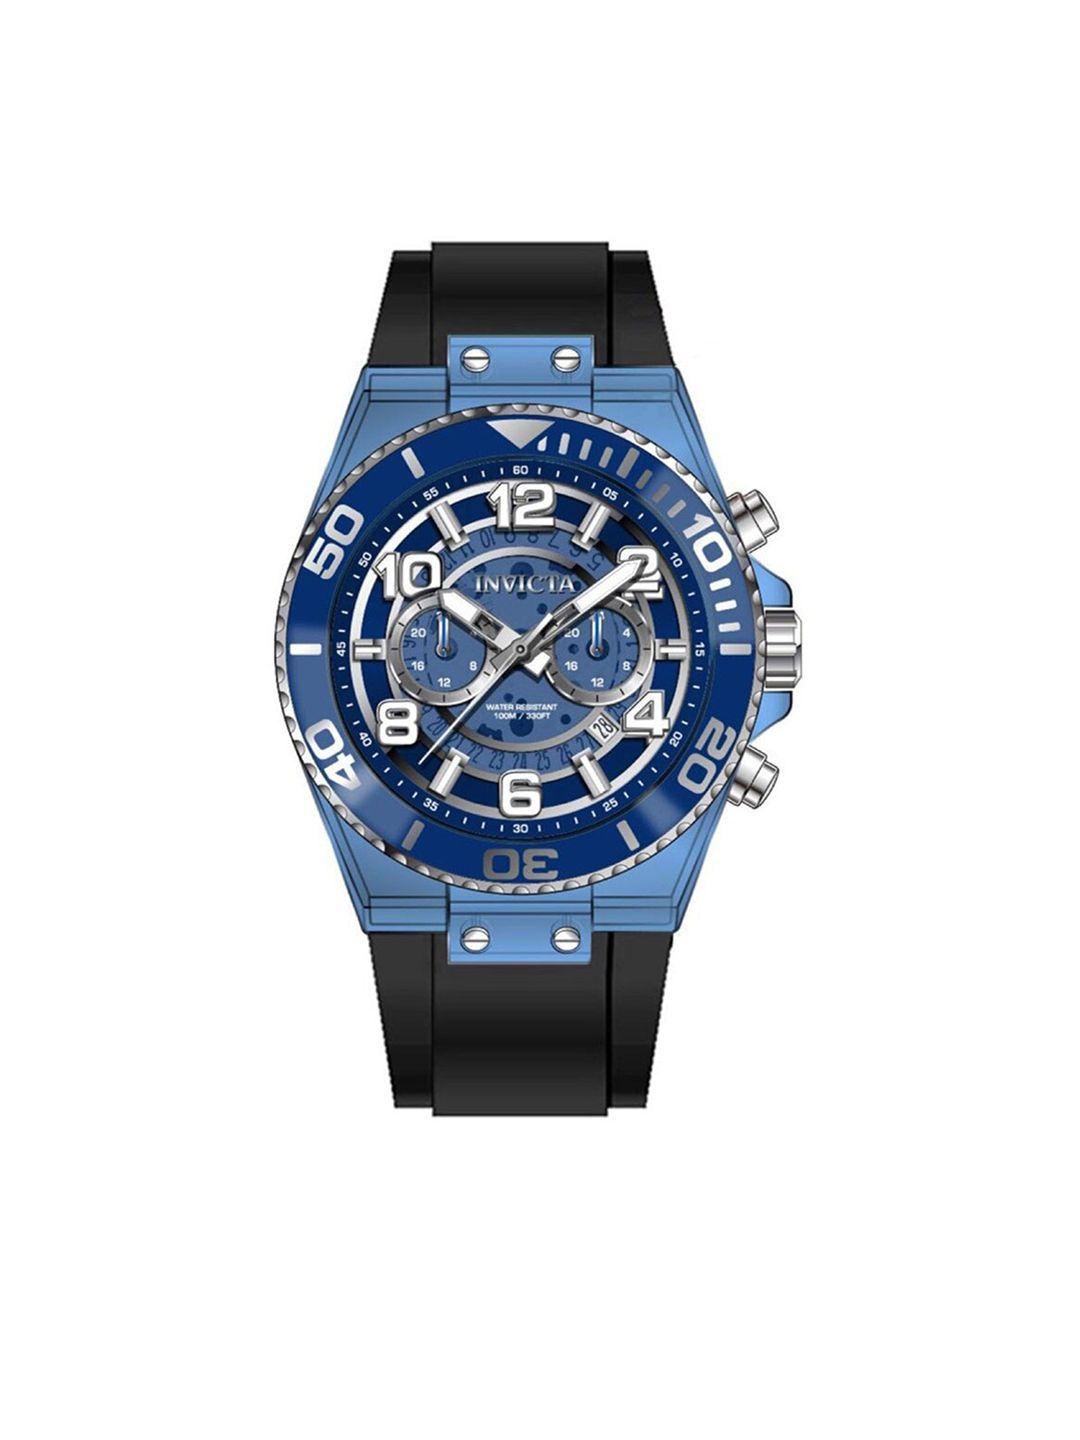 invicta-men-blue-dial-&-black-wrap-around-straps-analogue-watch-44372